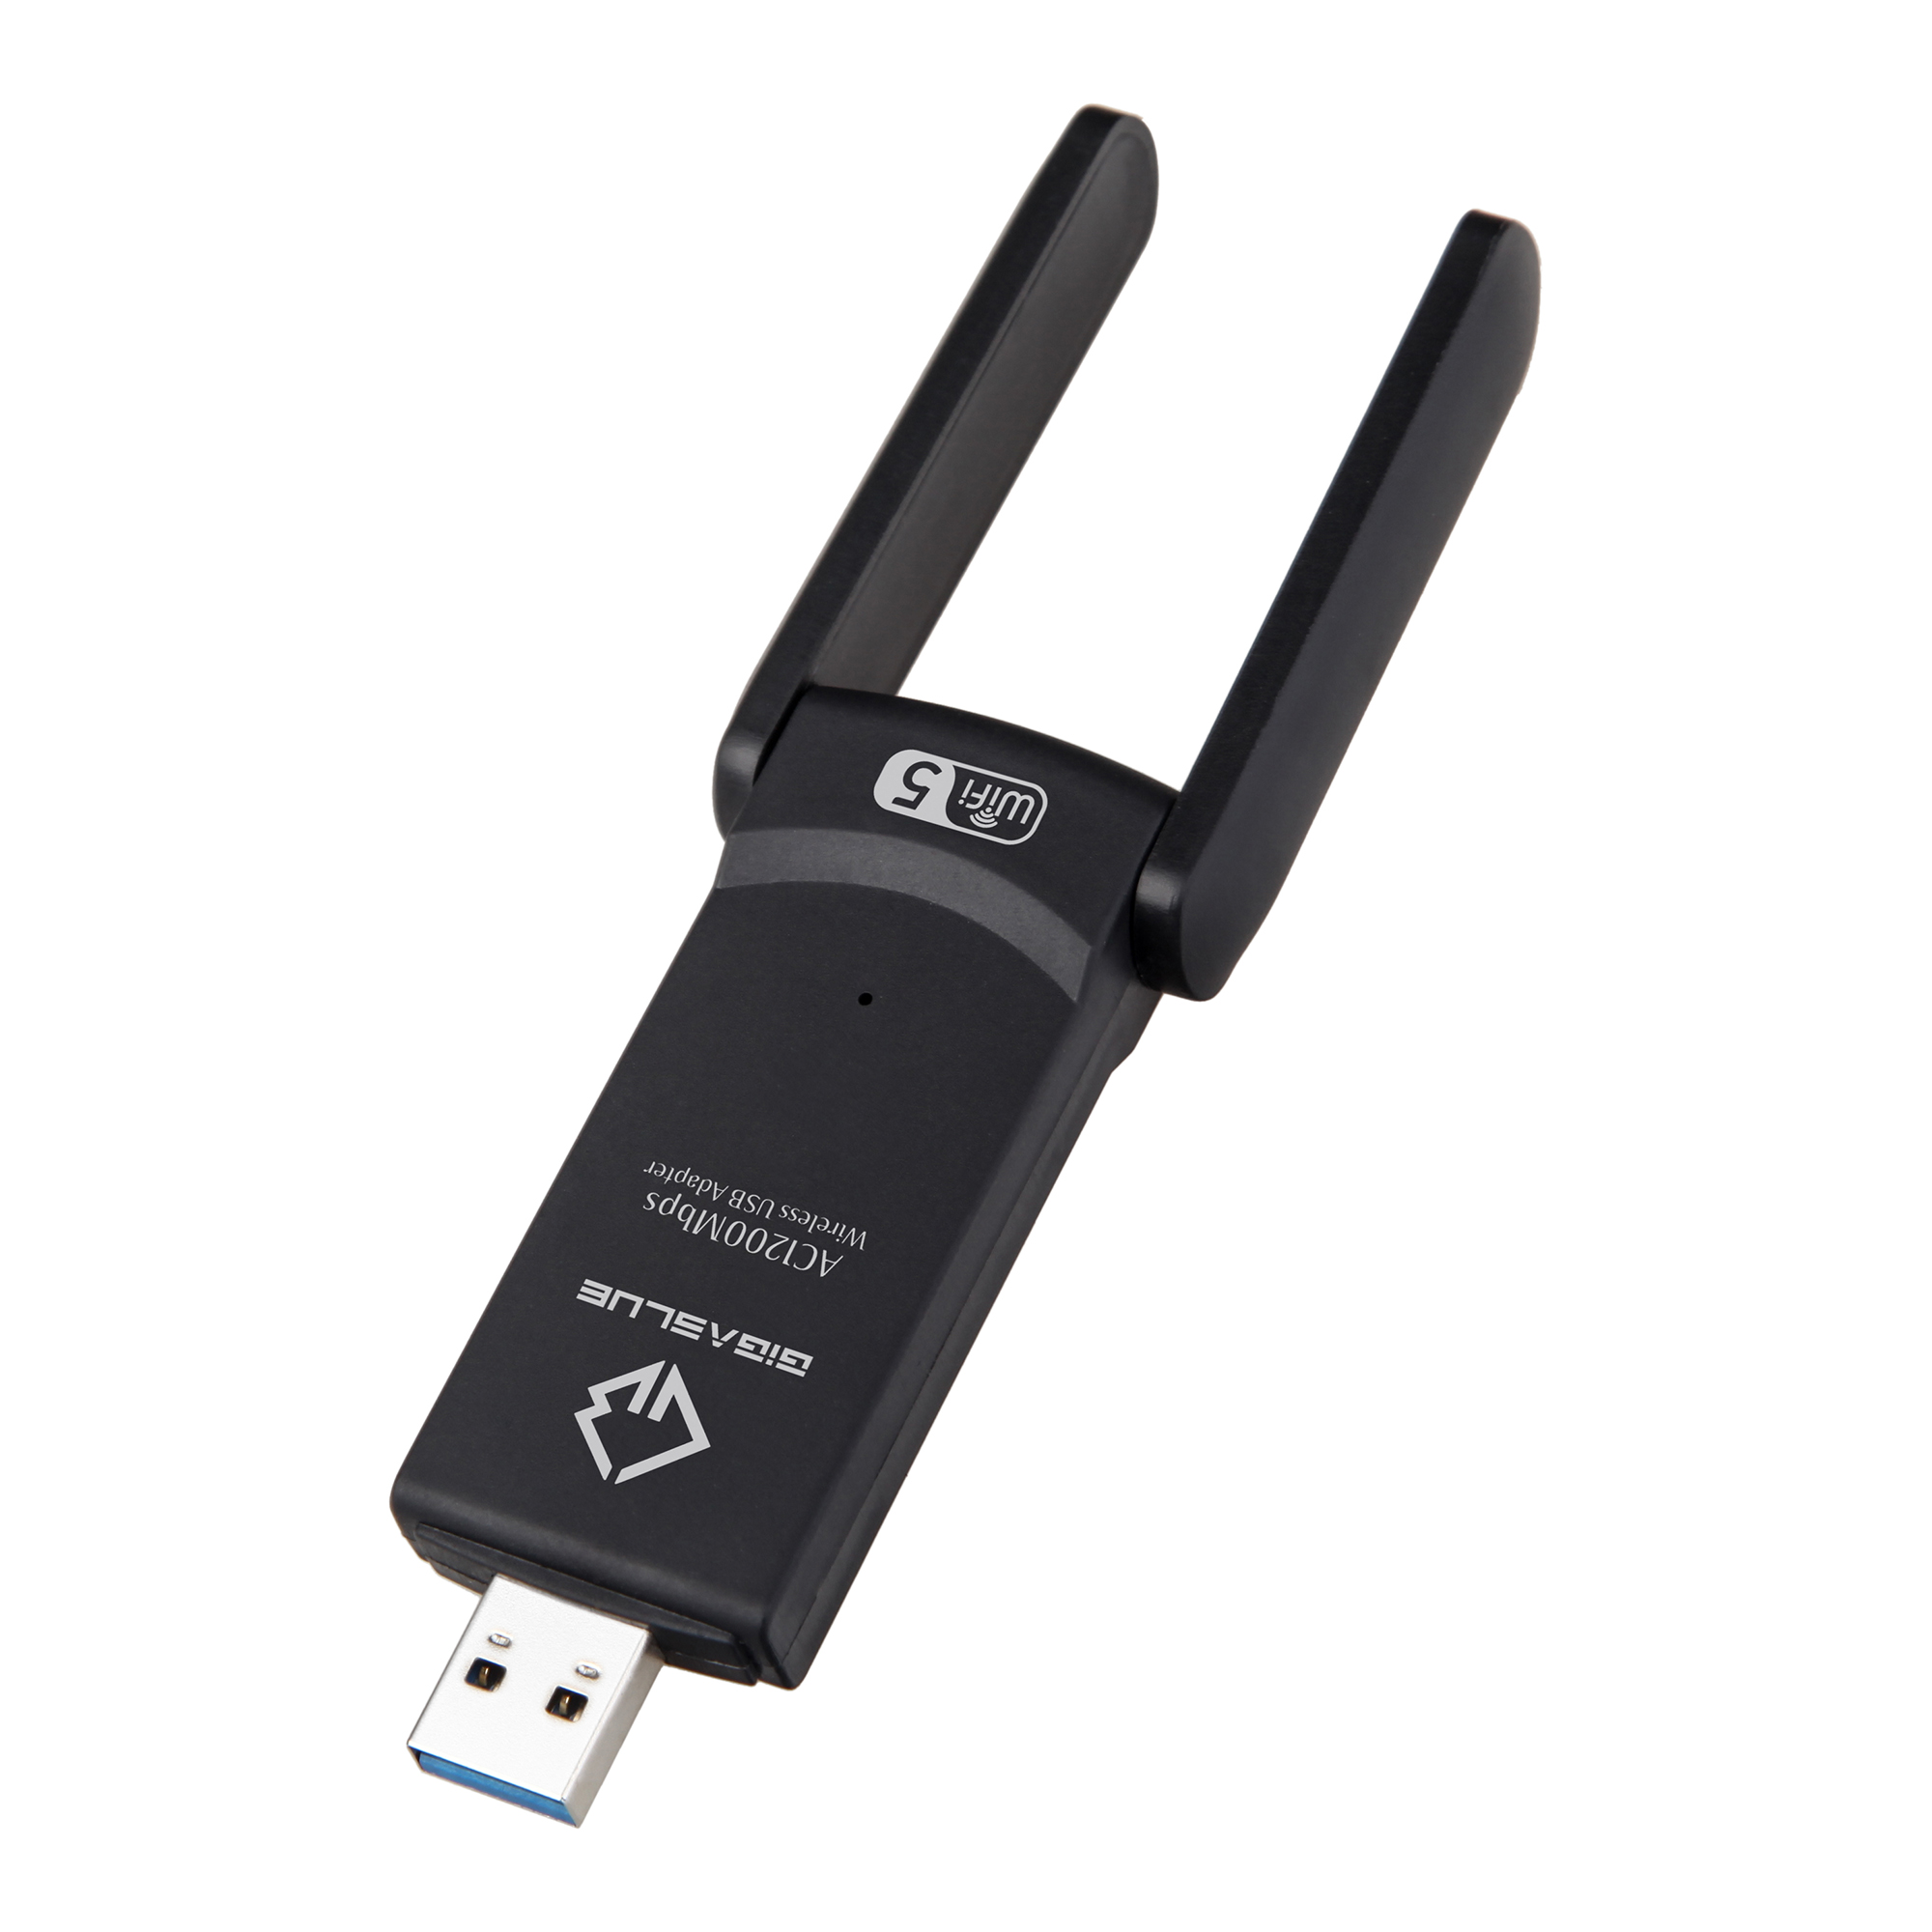 GigaBlue Ultra 1200Mbit/s Dual-Band WLAN 2.4 & 5GHz USB 3.0 High-Speed WiFi Stick mit Antenne